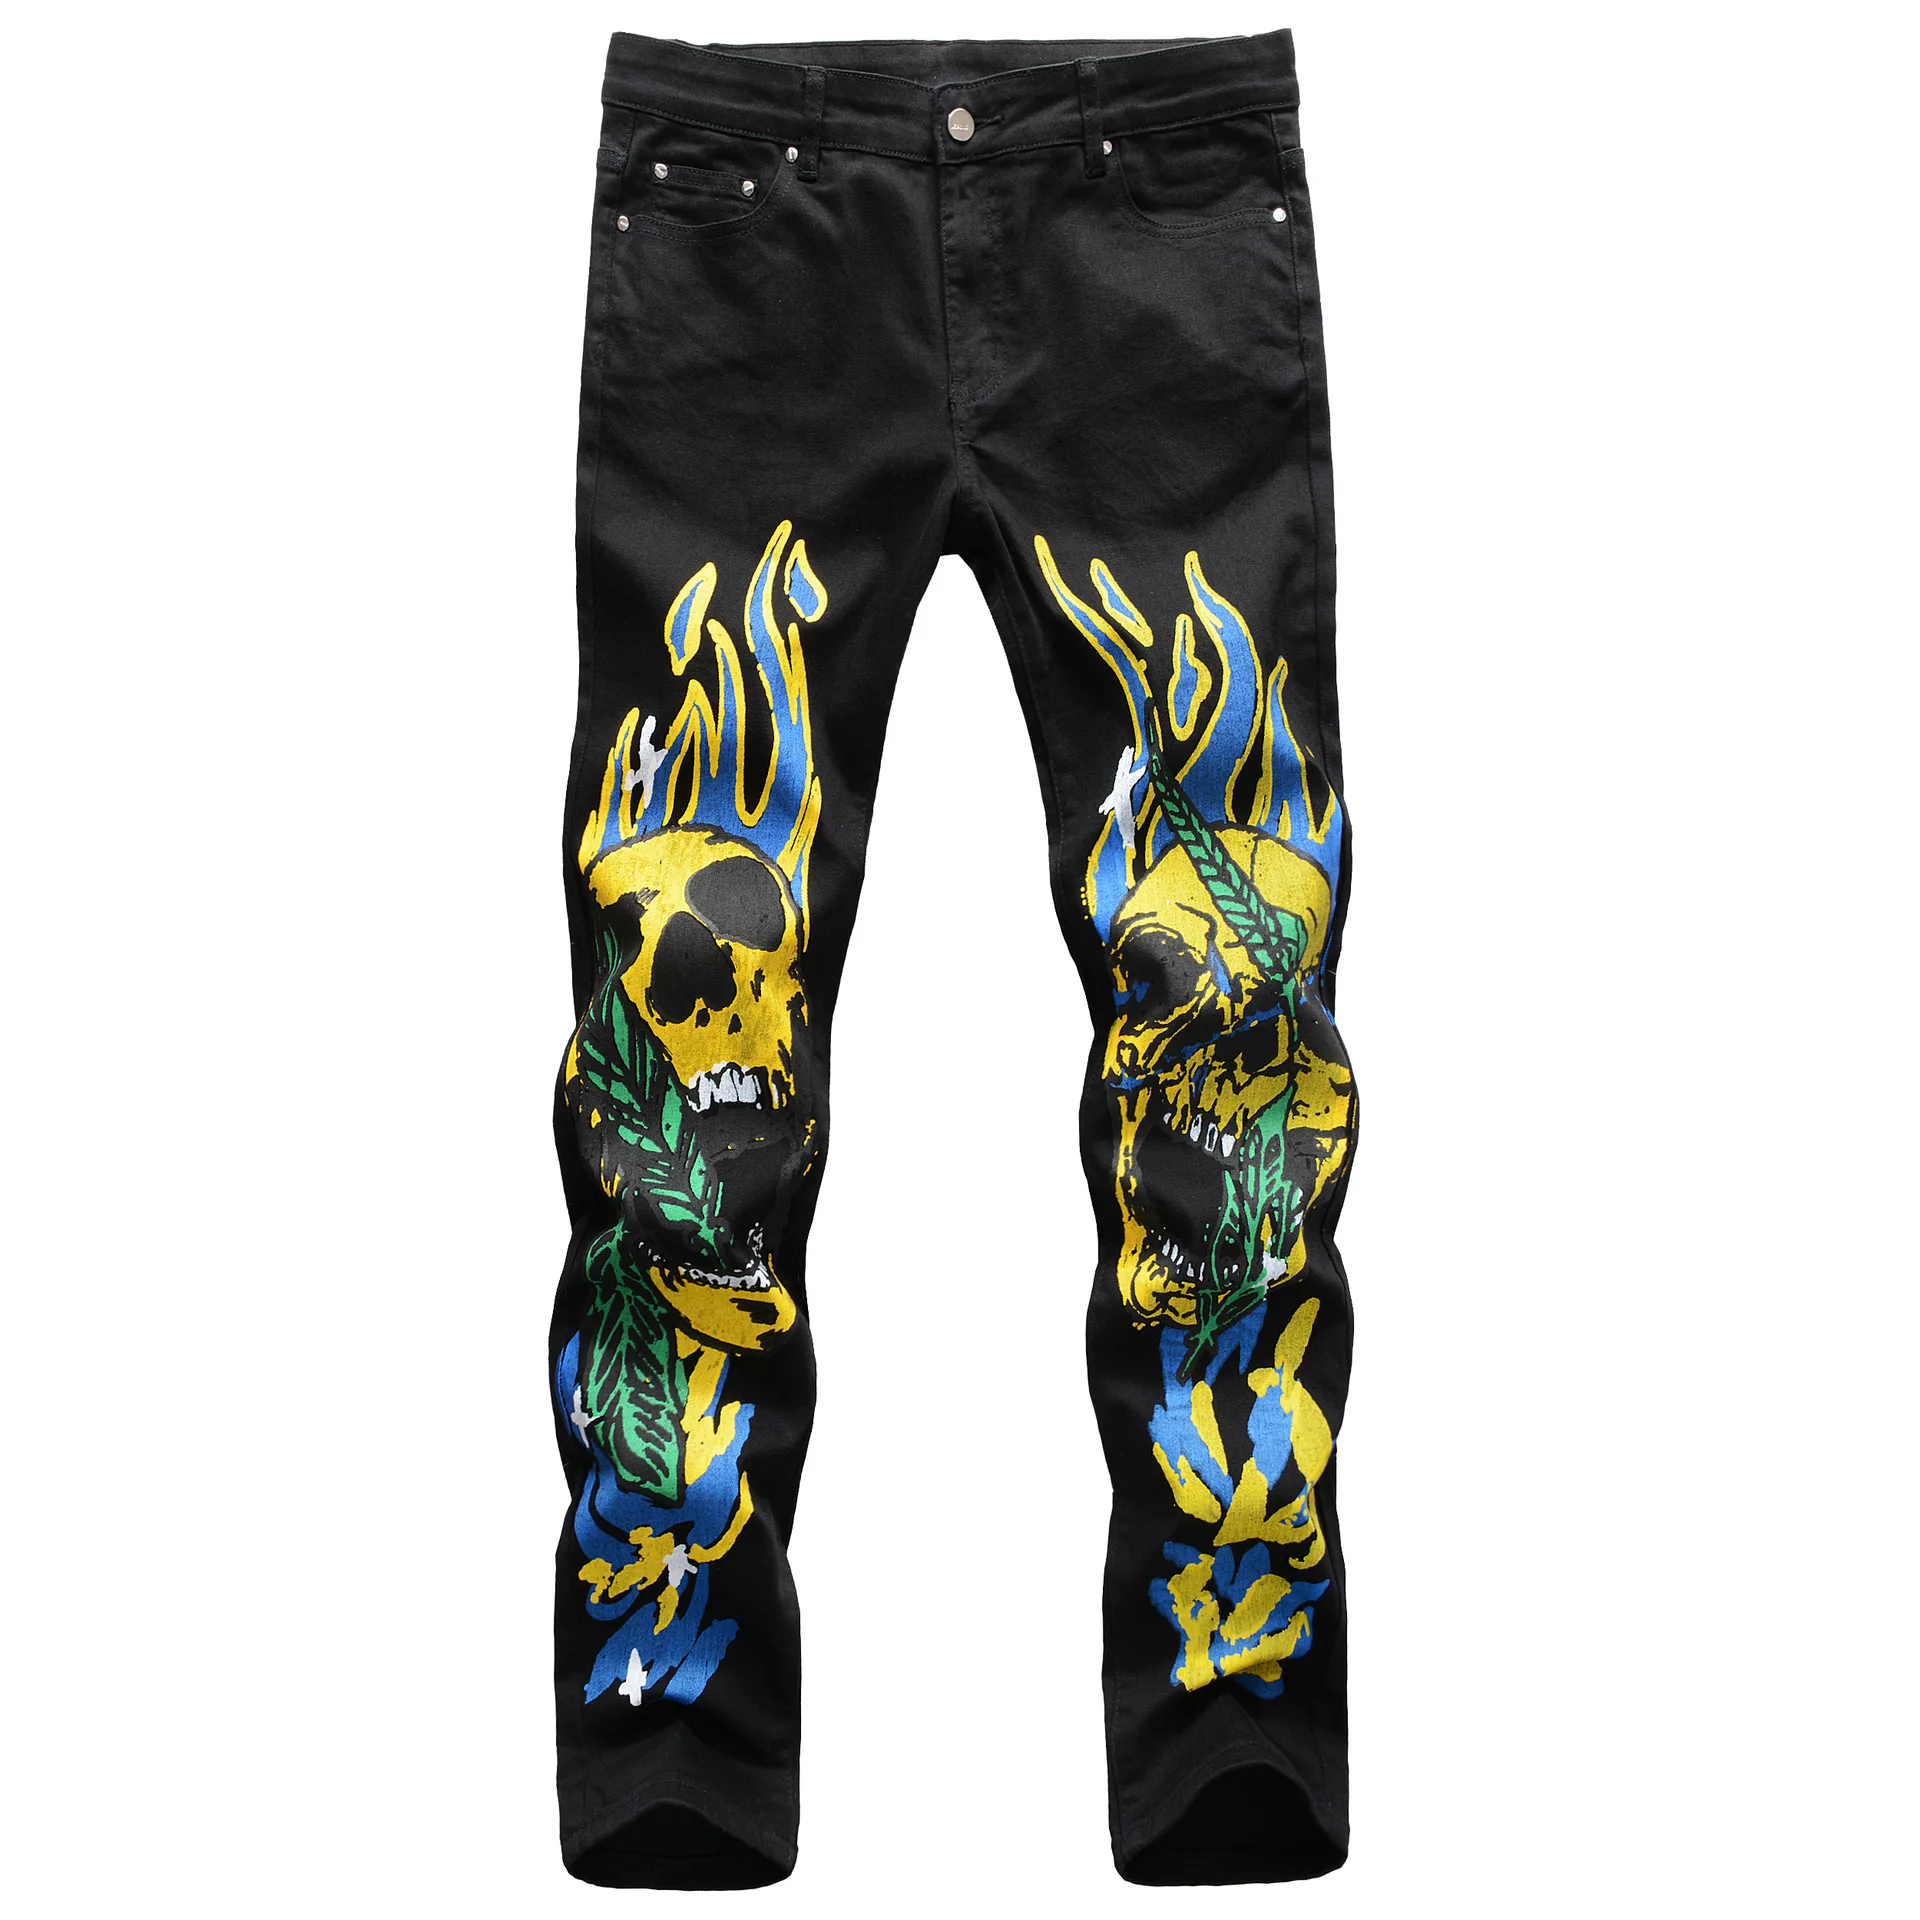 Fashion Men's Jeans Stretch Slim Fit 3D Color Print Black White Trousers Flame Skull Graffiti Street Men Denim Pants Jean Homme